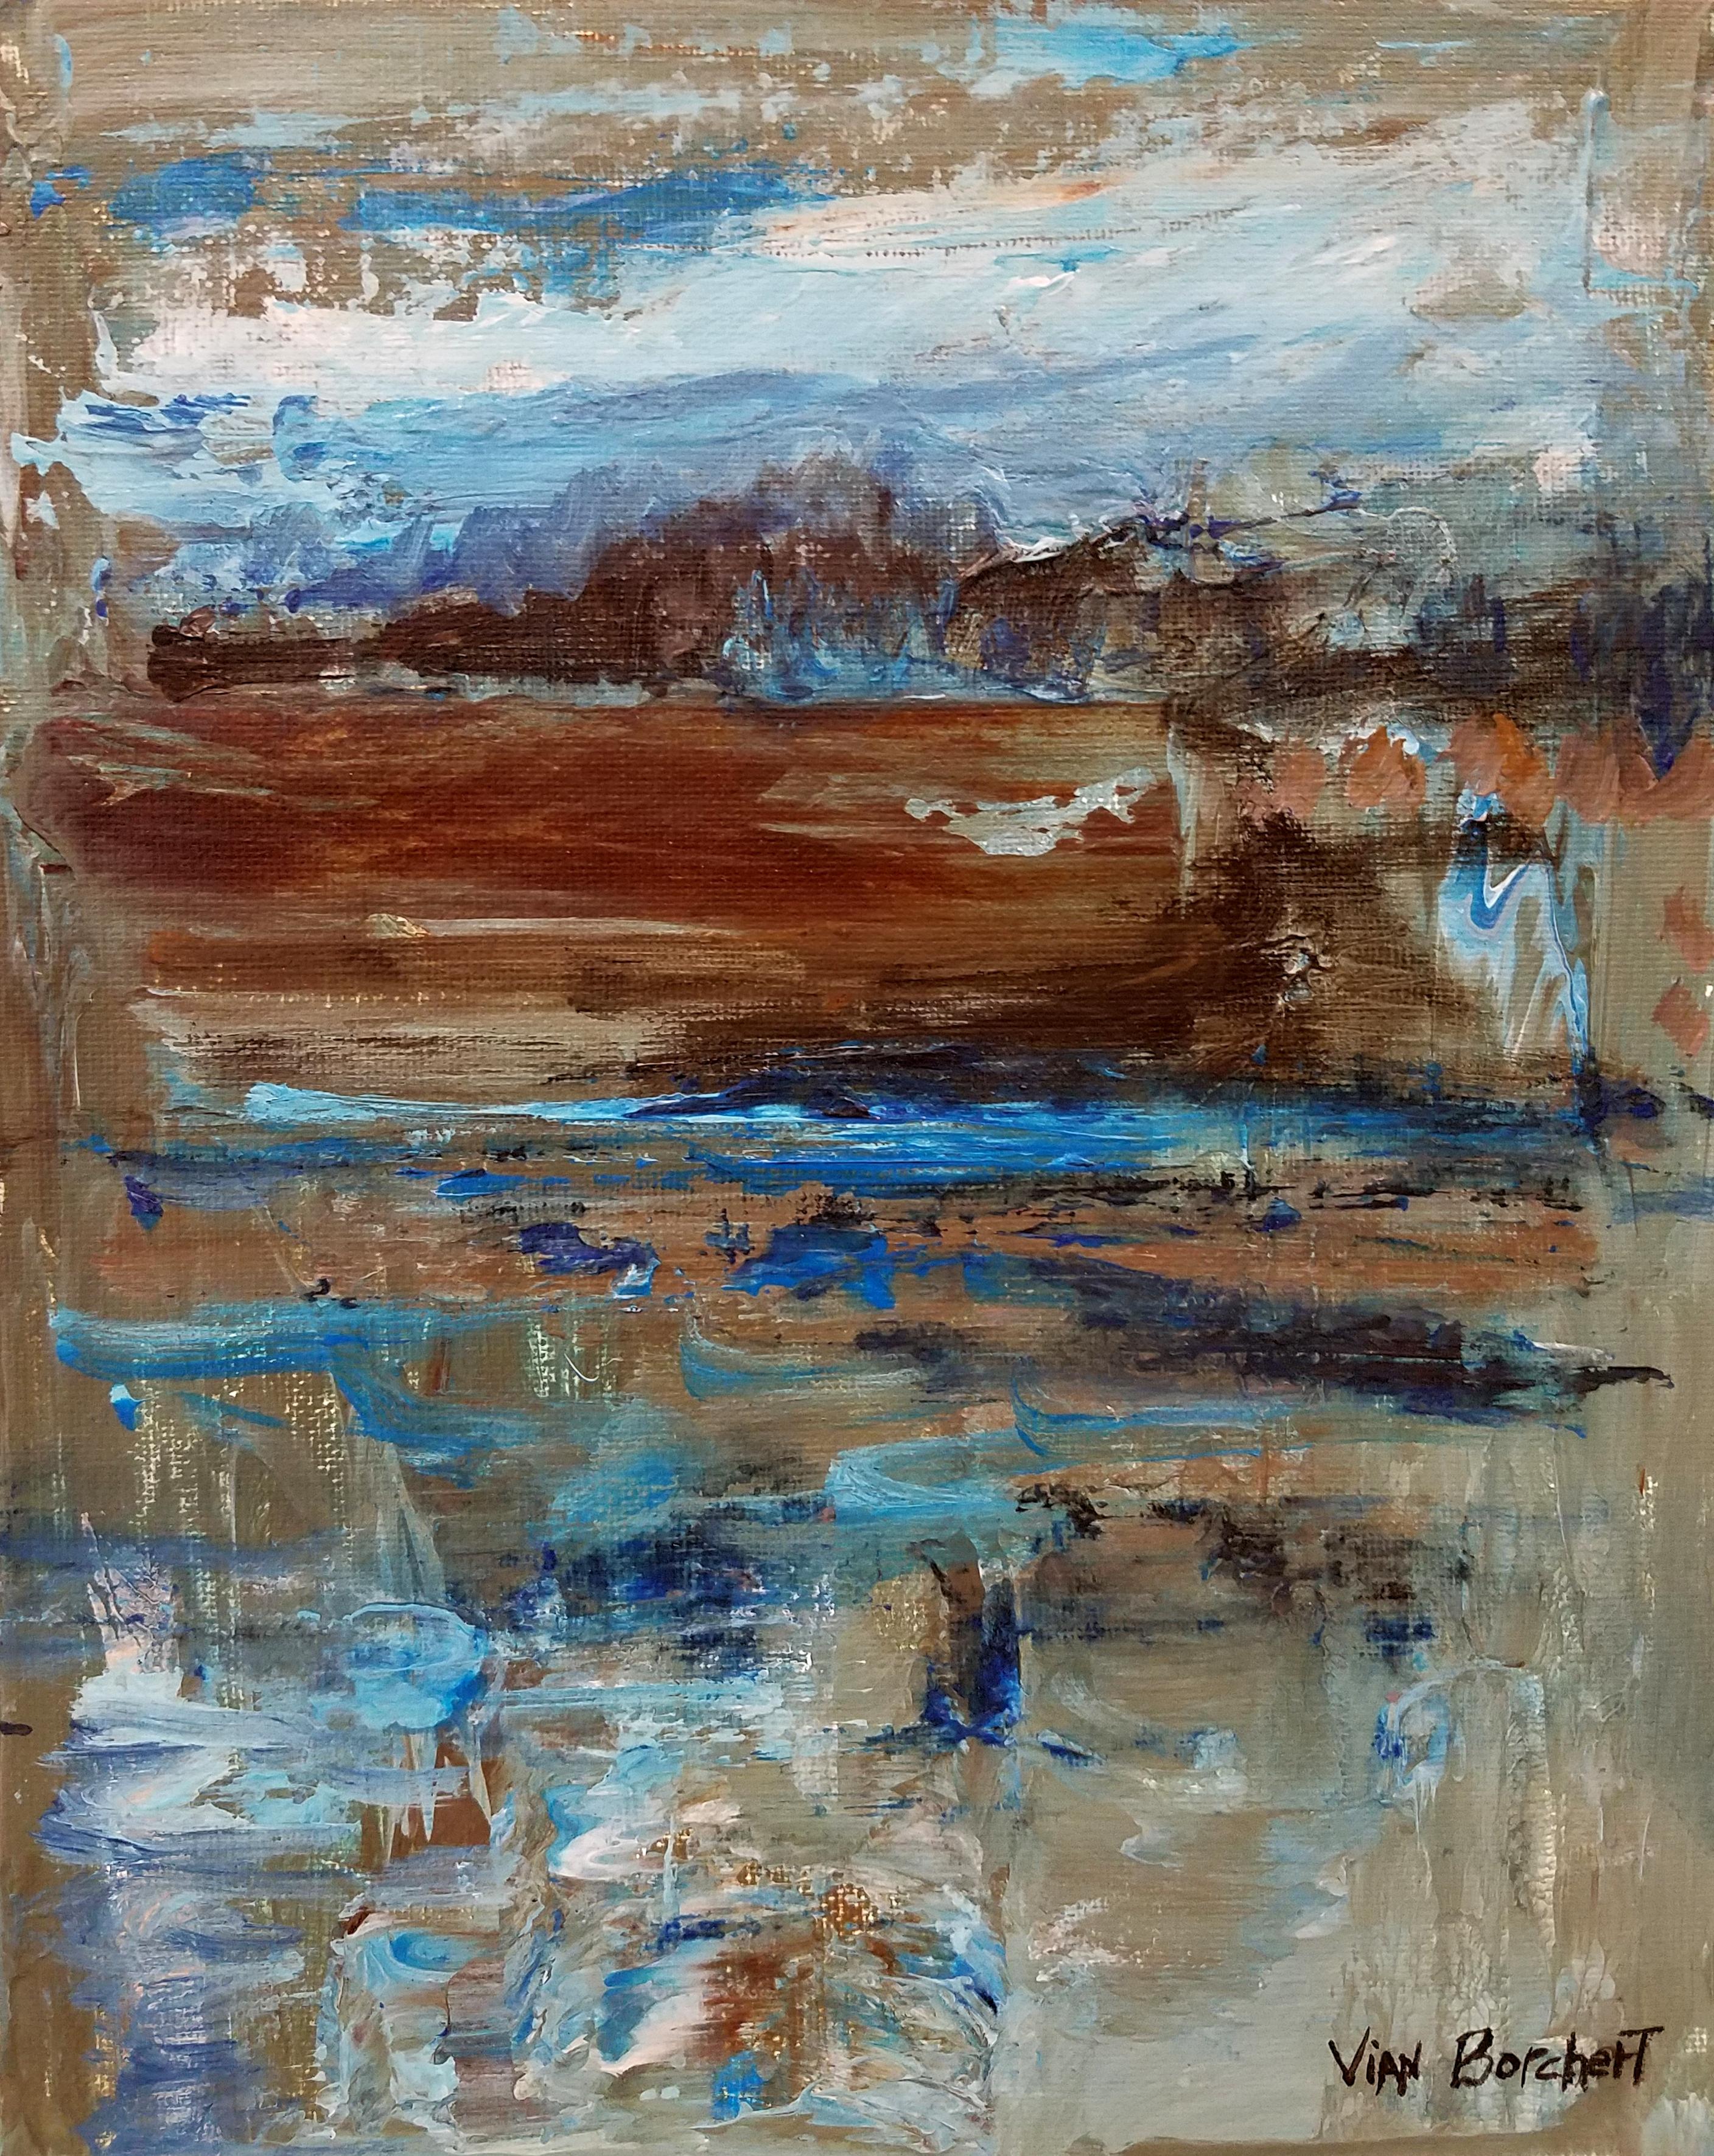 Vian Borchert Abstract Painting - "Brown Blue"